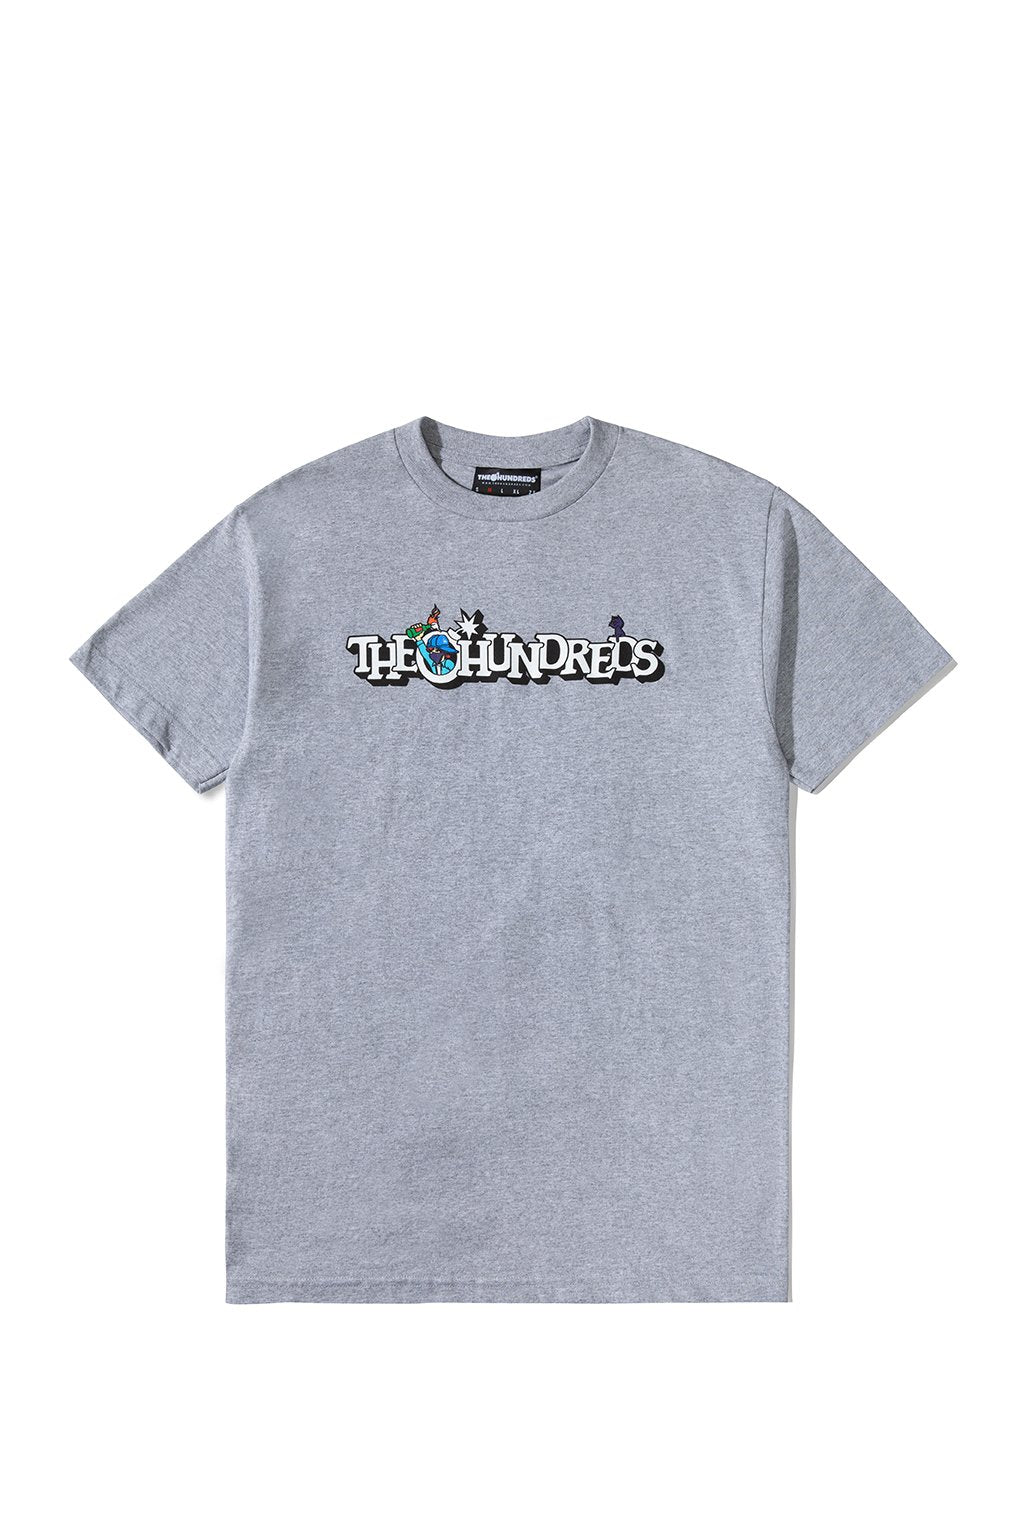 Loot T-Shirt – The Hundreds